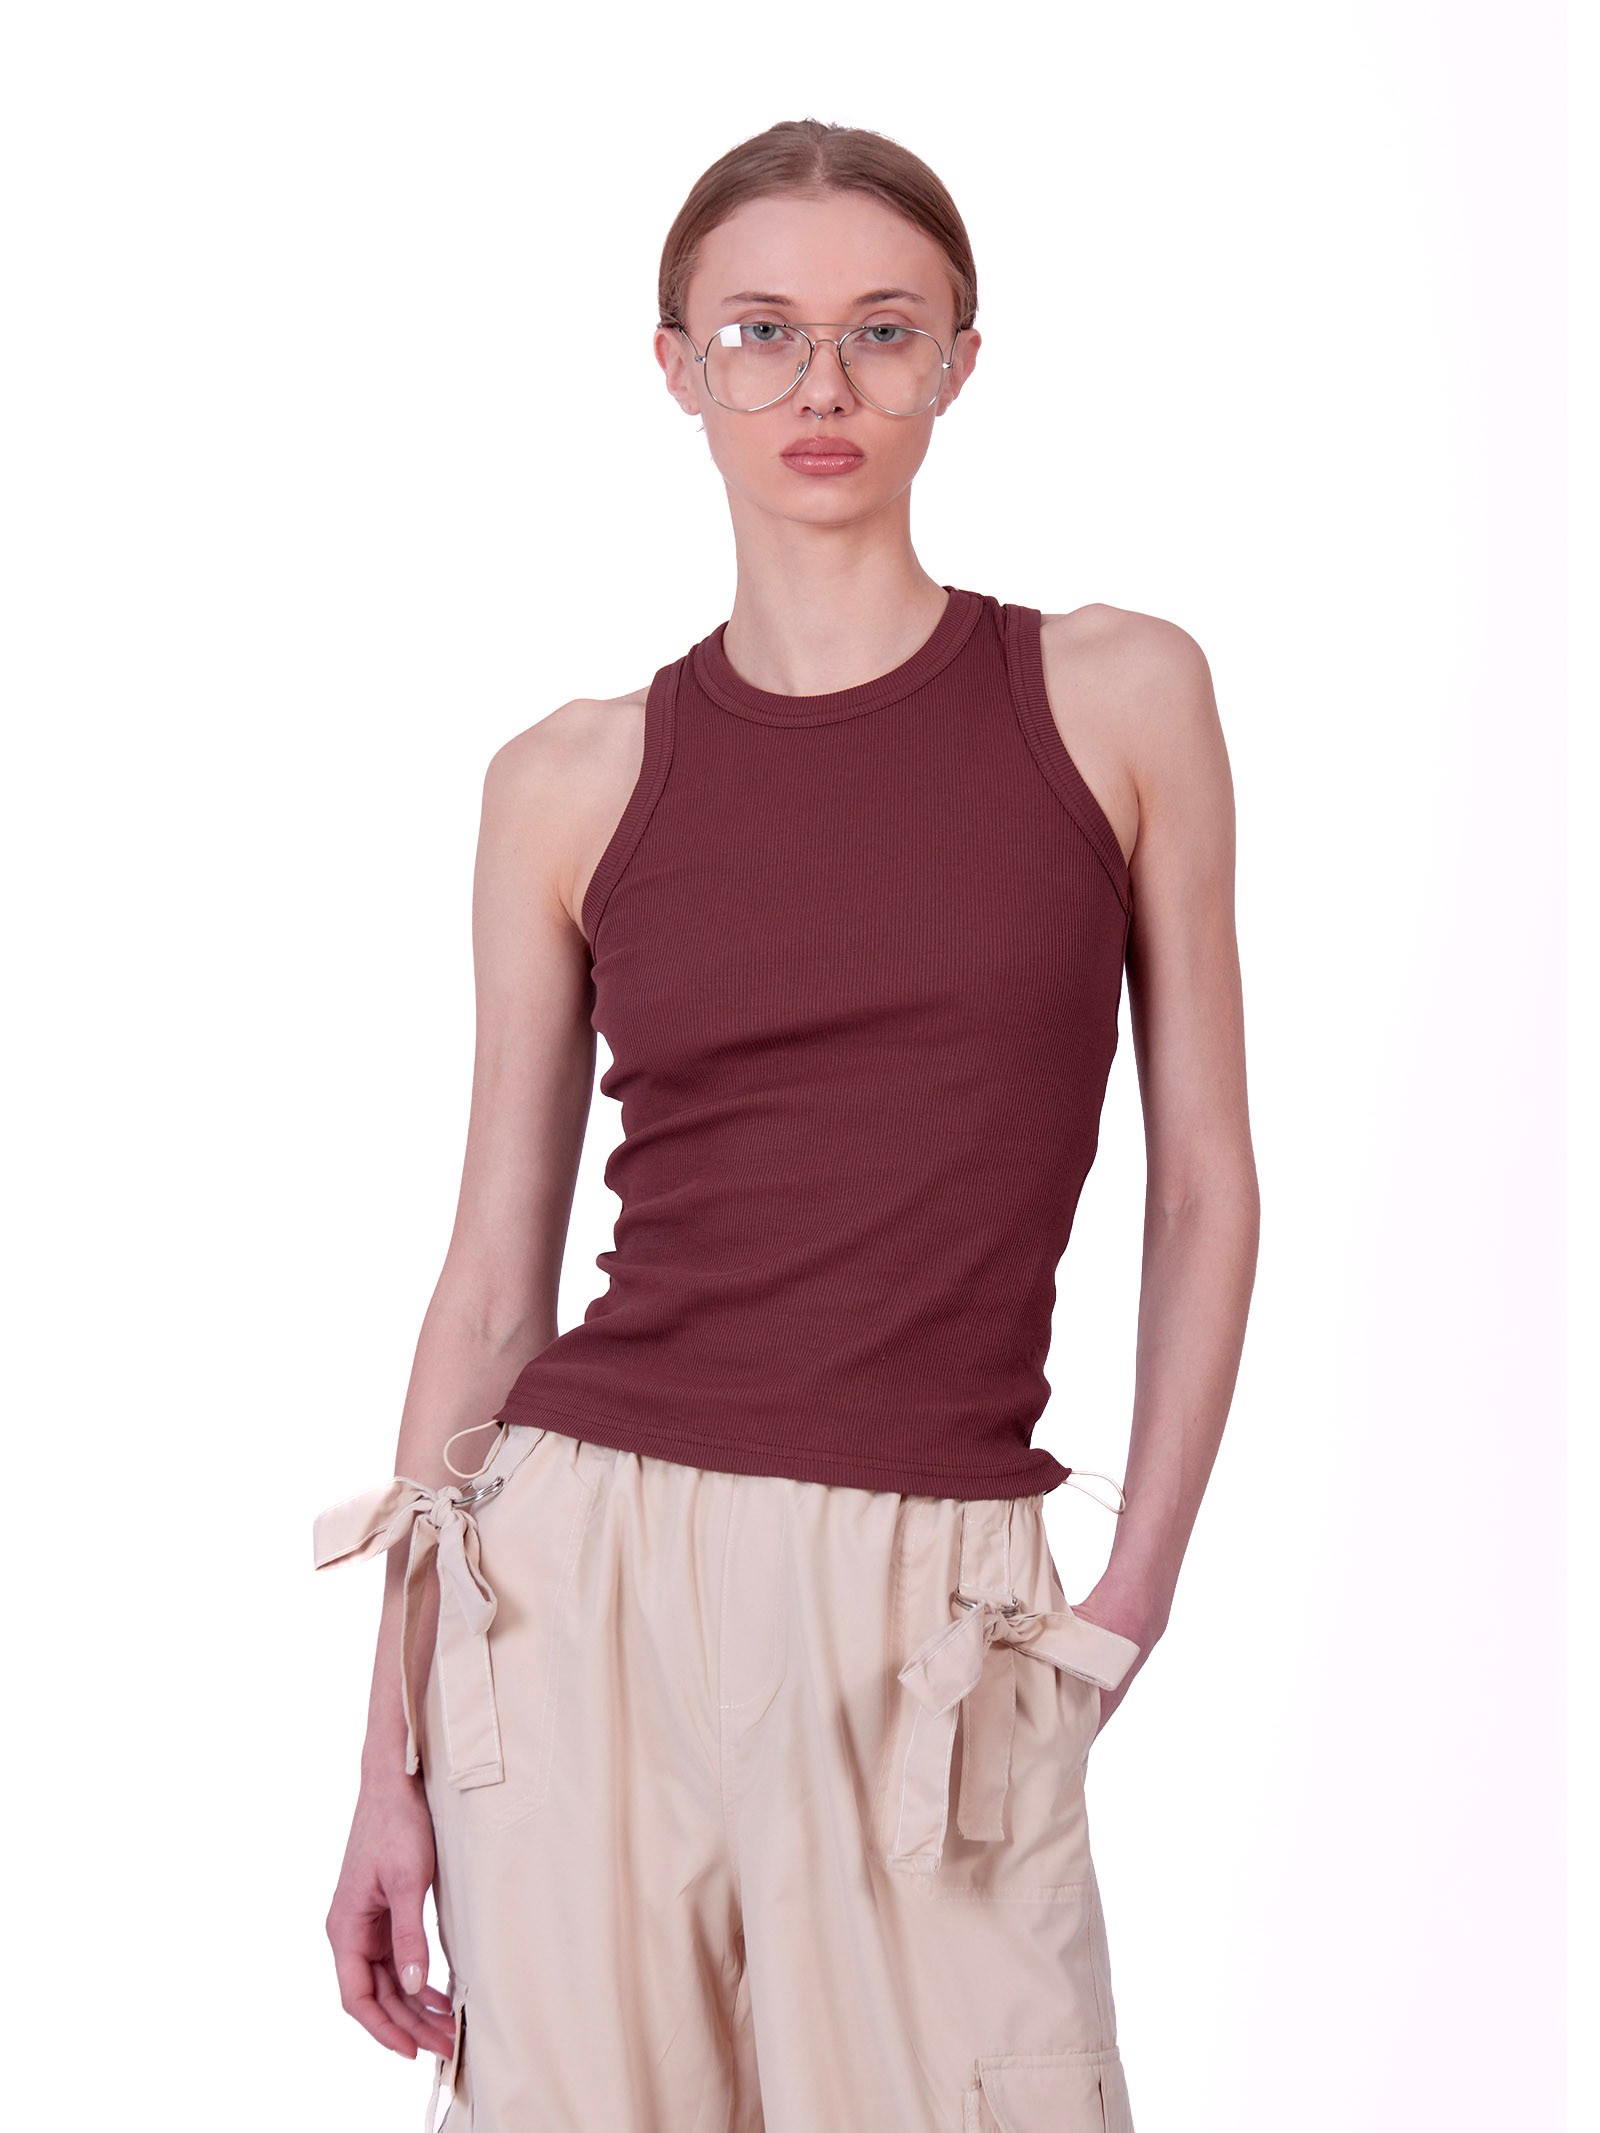 Stretch fabric brown undershirt  